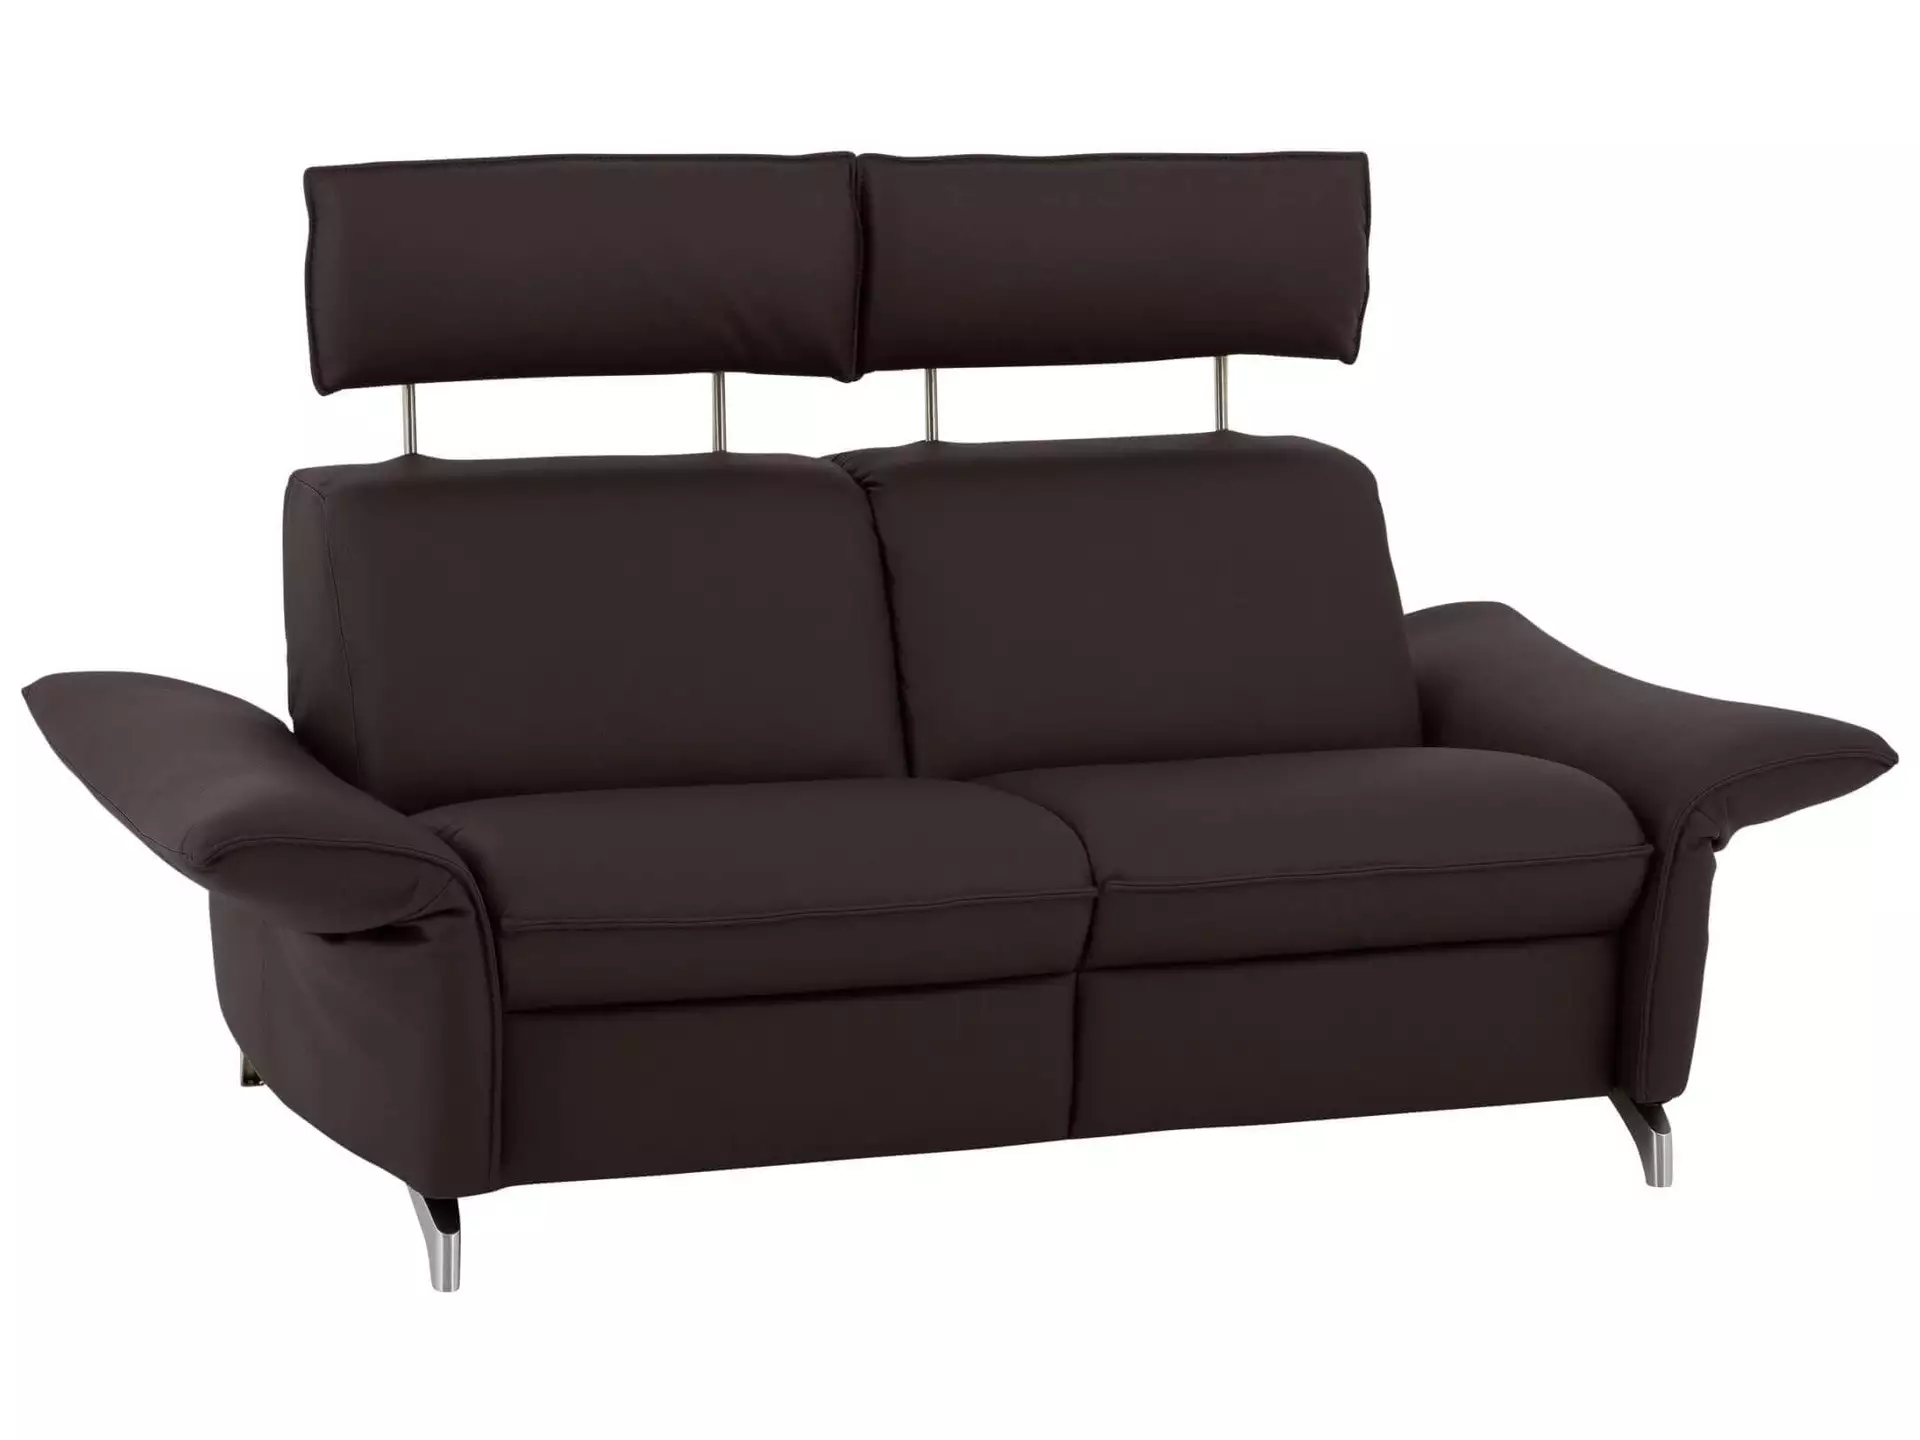 Sofa Catania Basic B: 164 cm Himolla / Farbe: Schoko / Material: Leder Basic